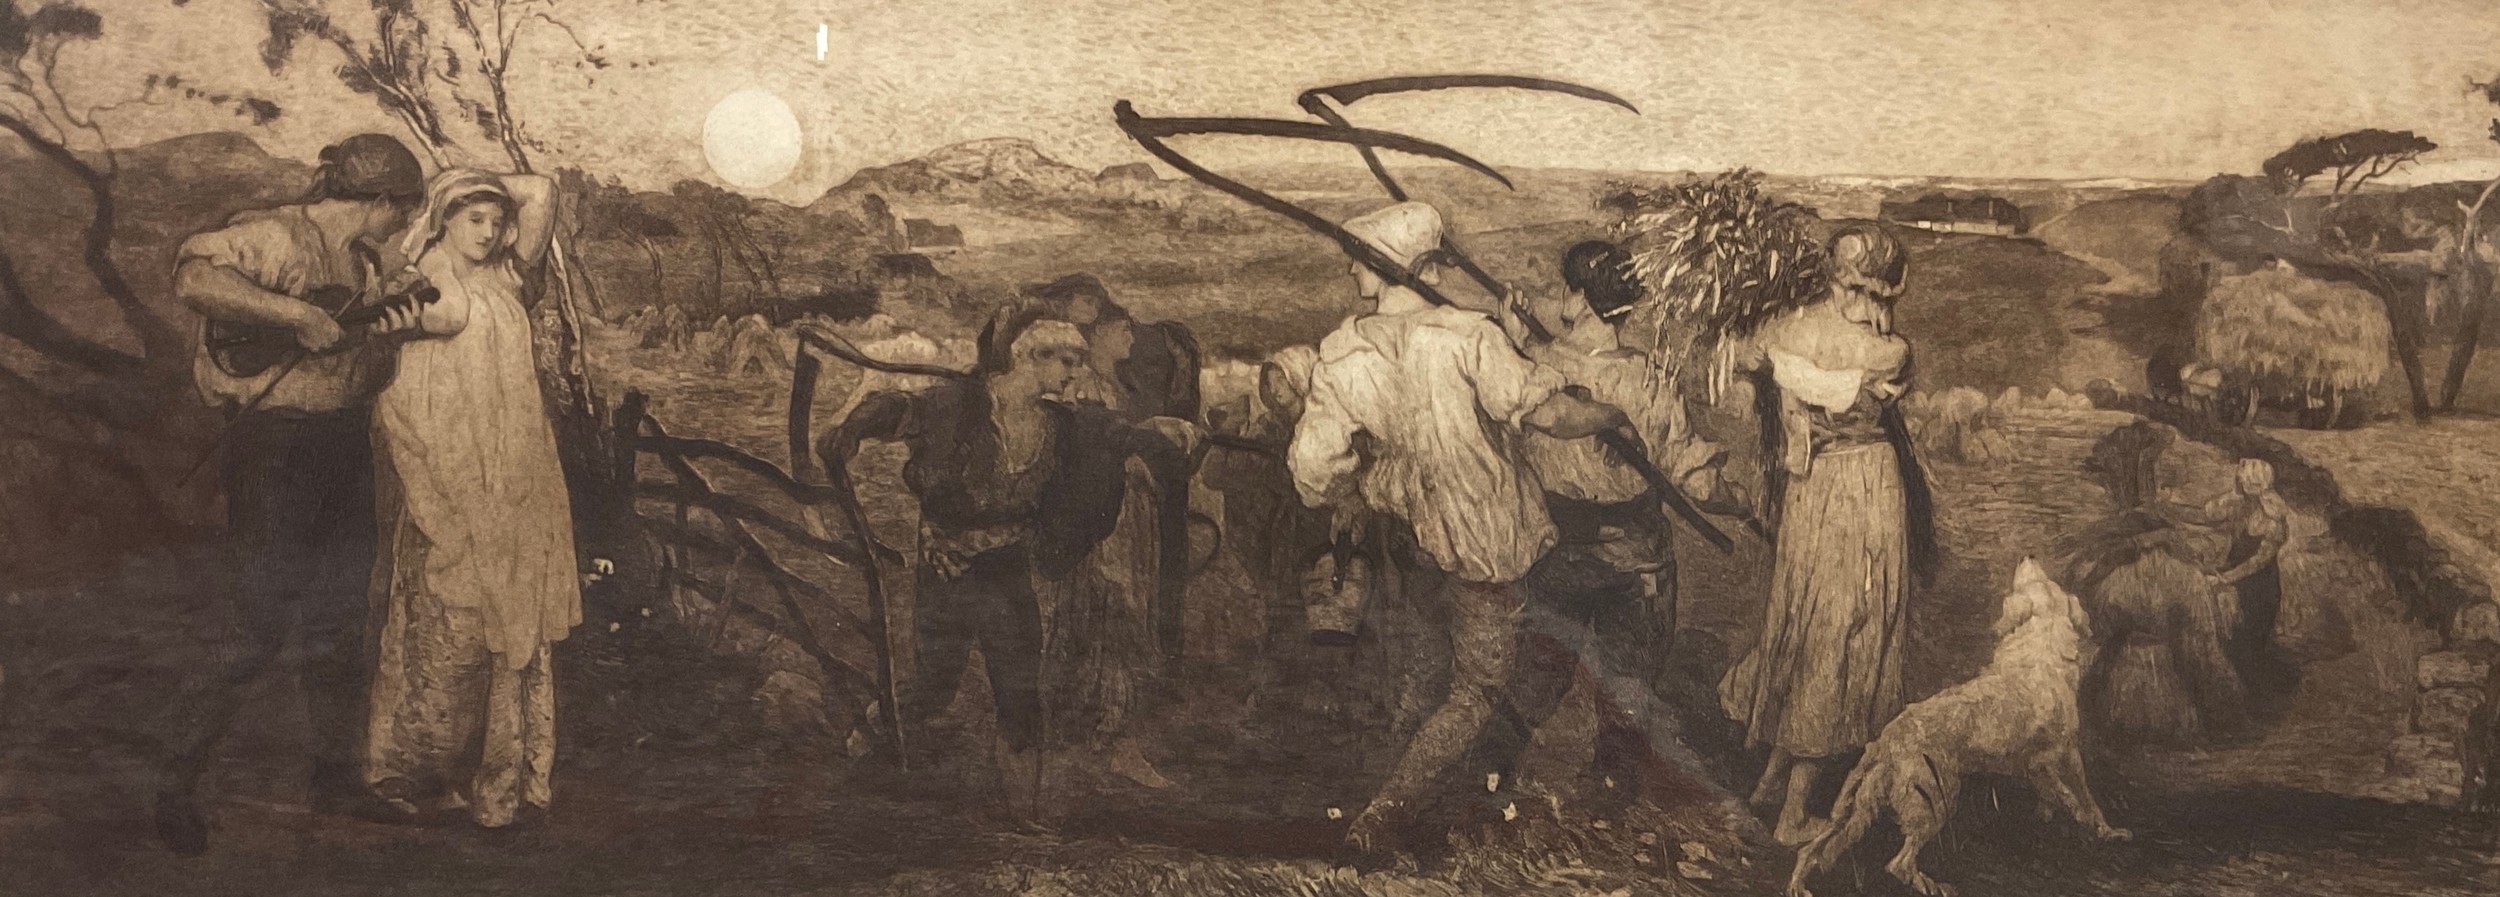 Robert Walker Macbeth, after George Mason, ‘The Harvest Moon’, engraving, 32cm x 86.5cm, c.1883; - Image 2 of 3